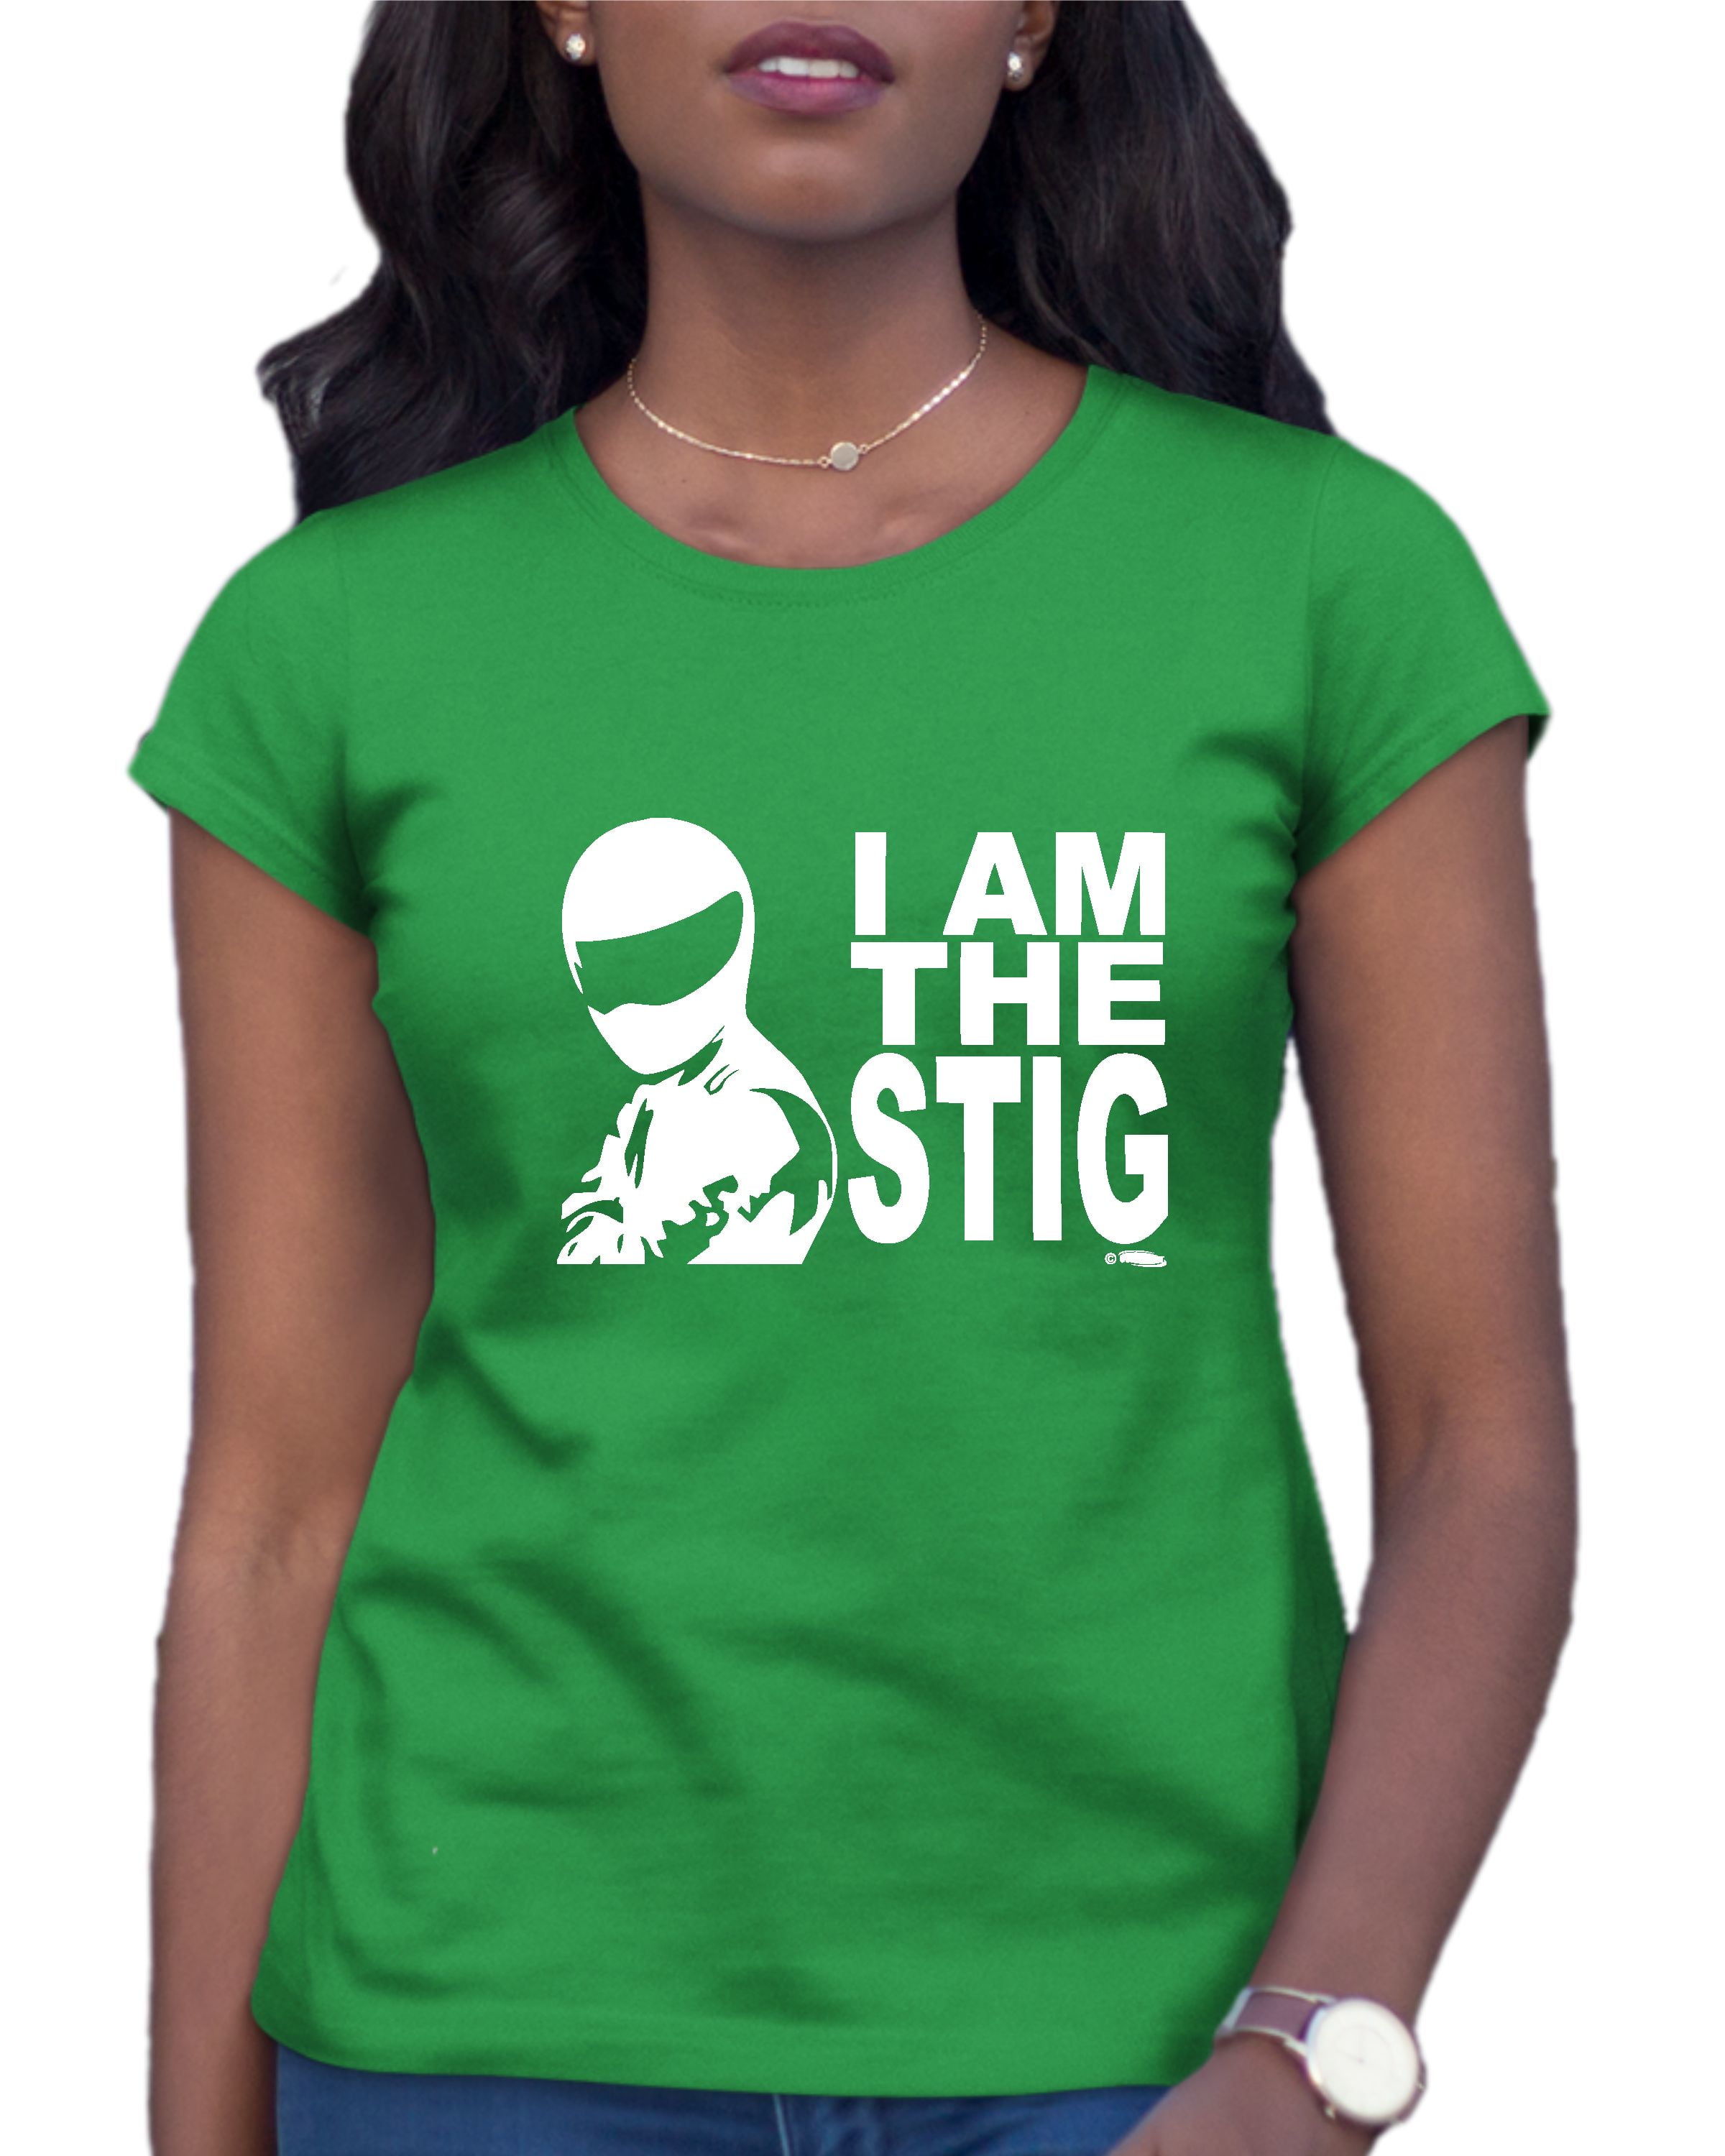 I The Stig T-Shirt - Walmart.com